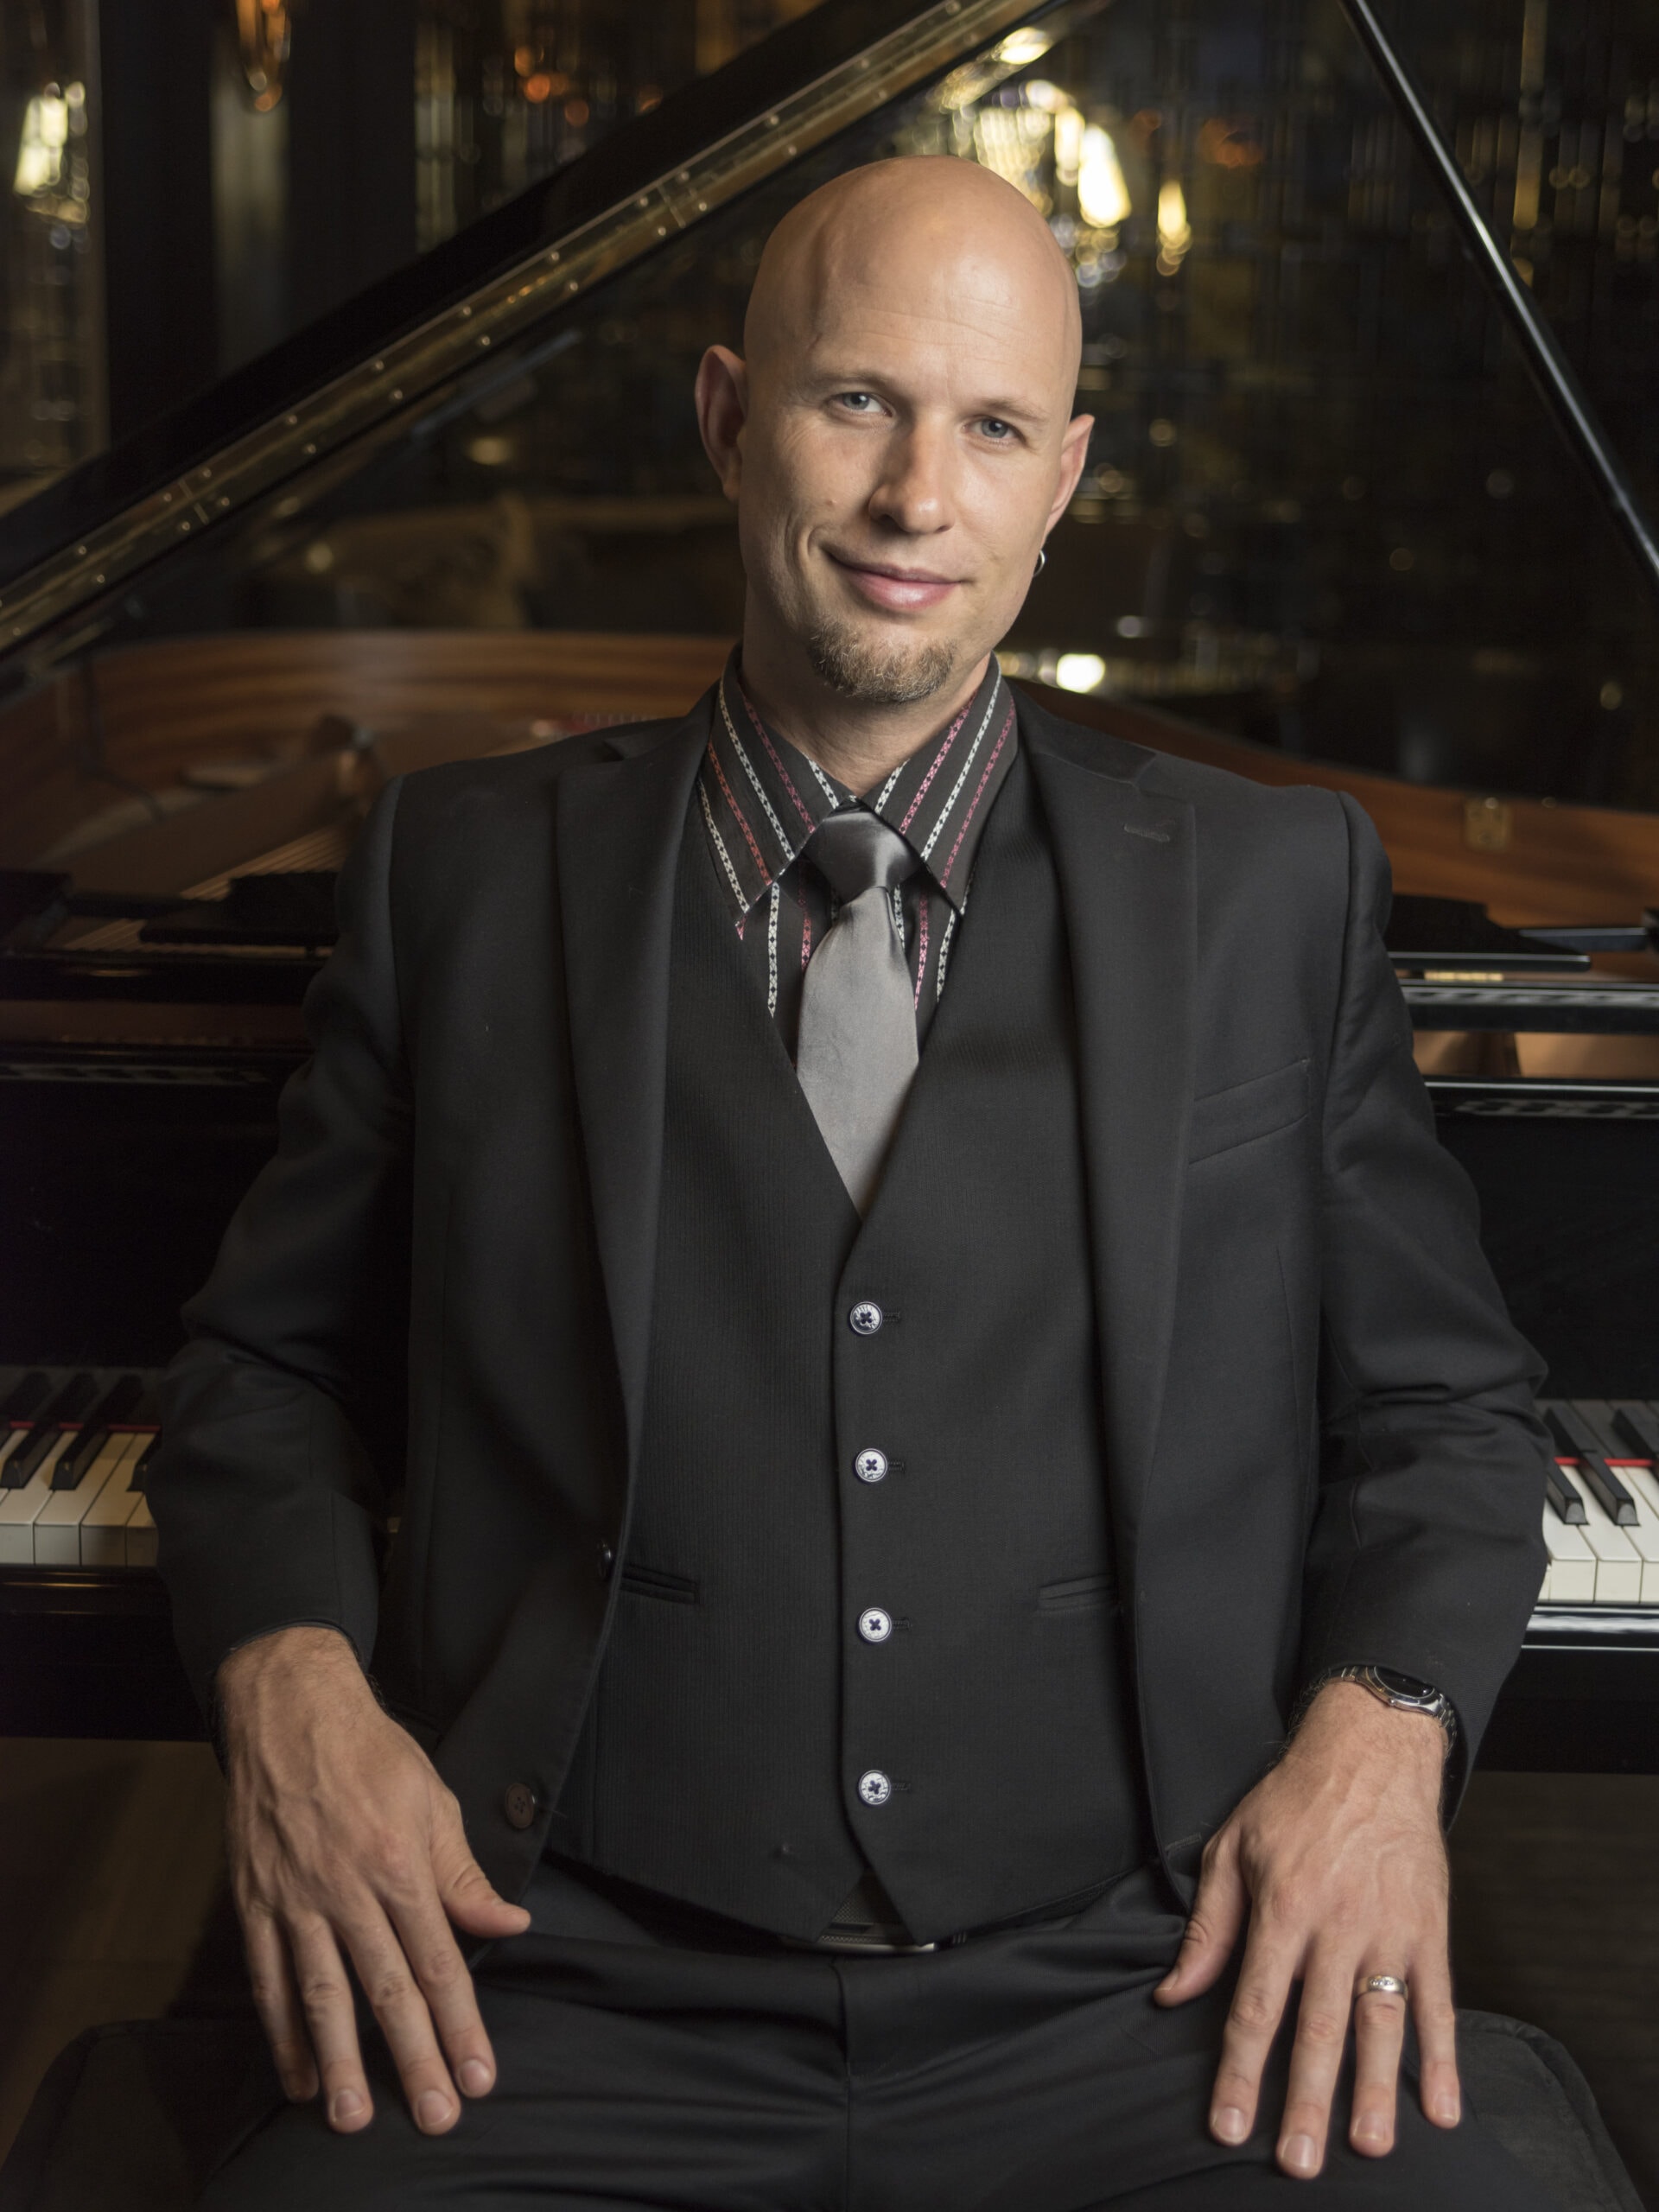 Hotel Bel-Air pianist